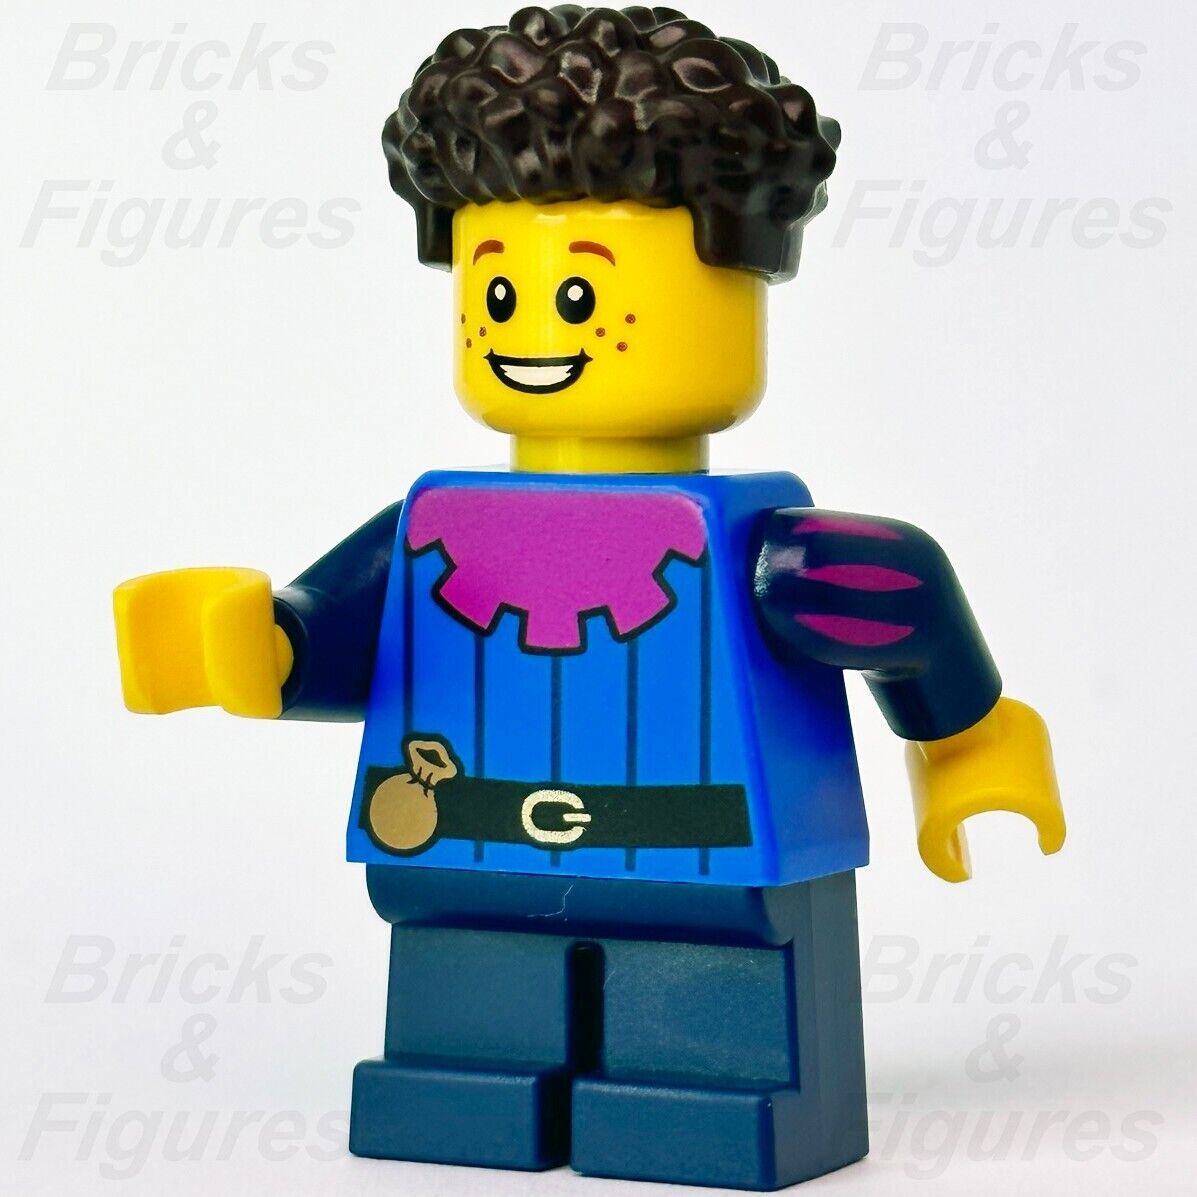 LEGO Lion Knights Prince / Peasant Boy Castle Minifigure Child 10305 cas577 - Bricks & Figures